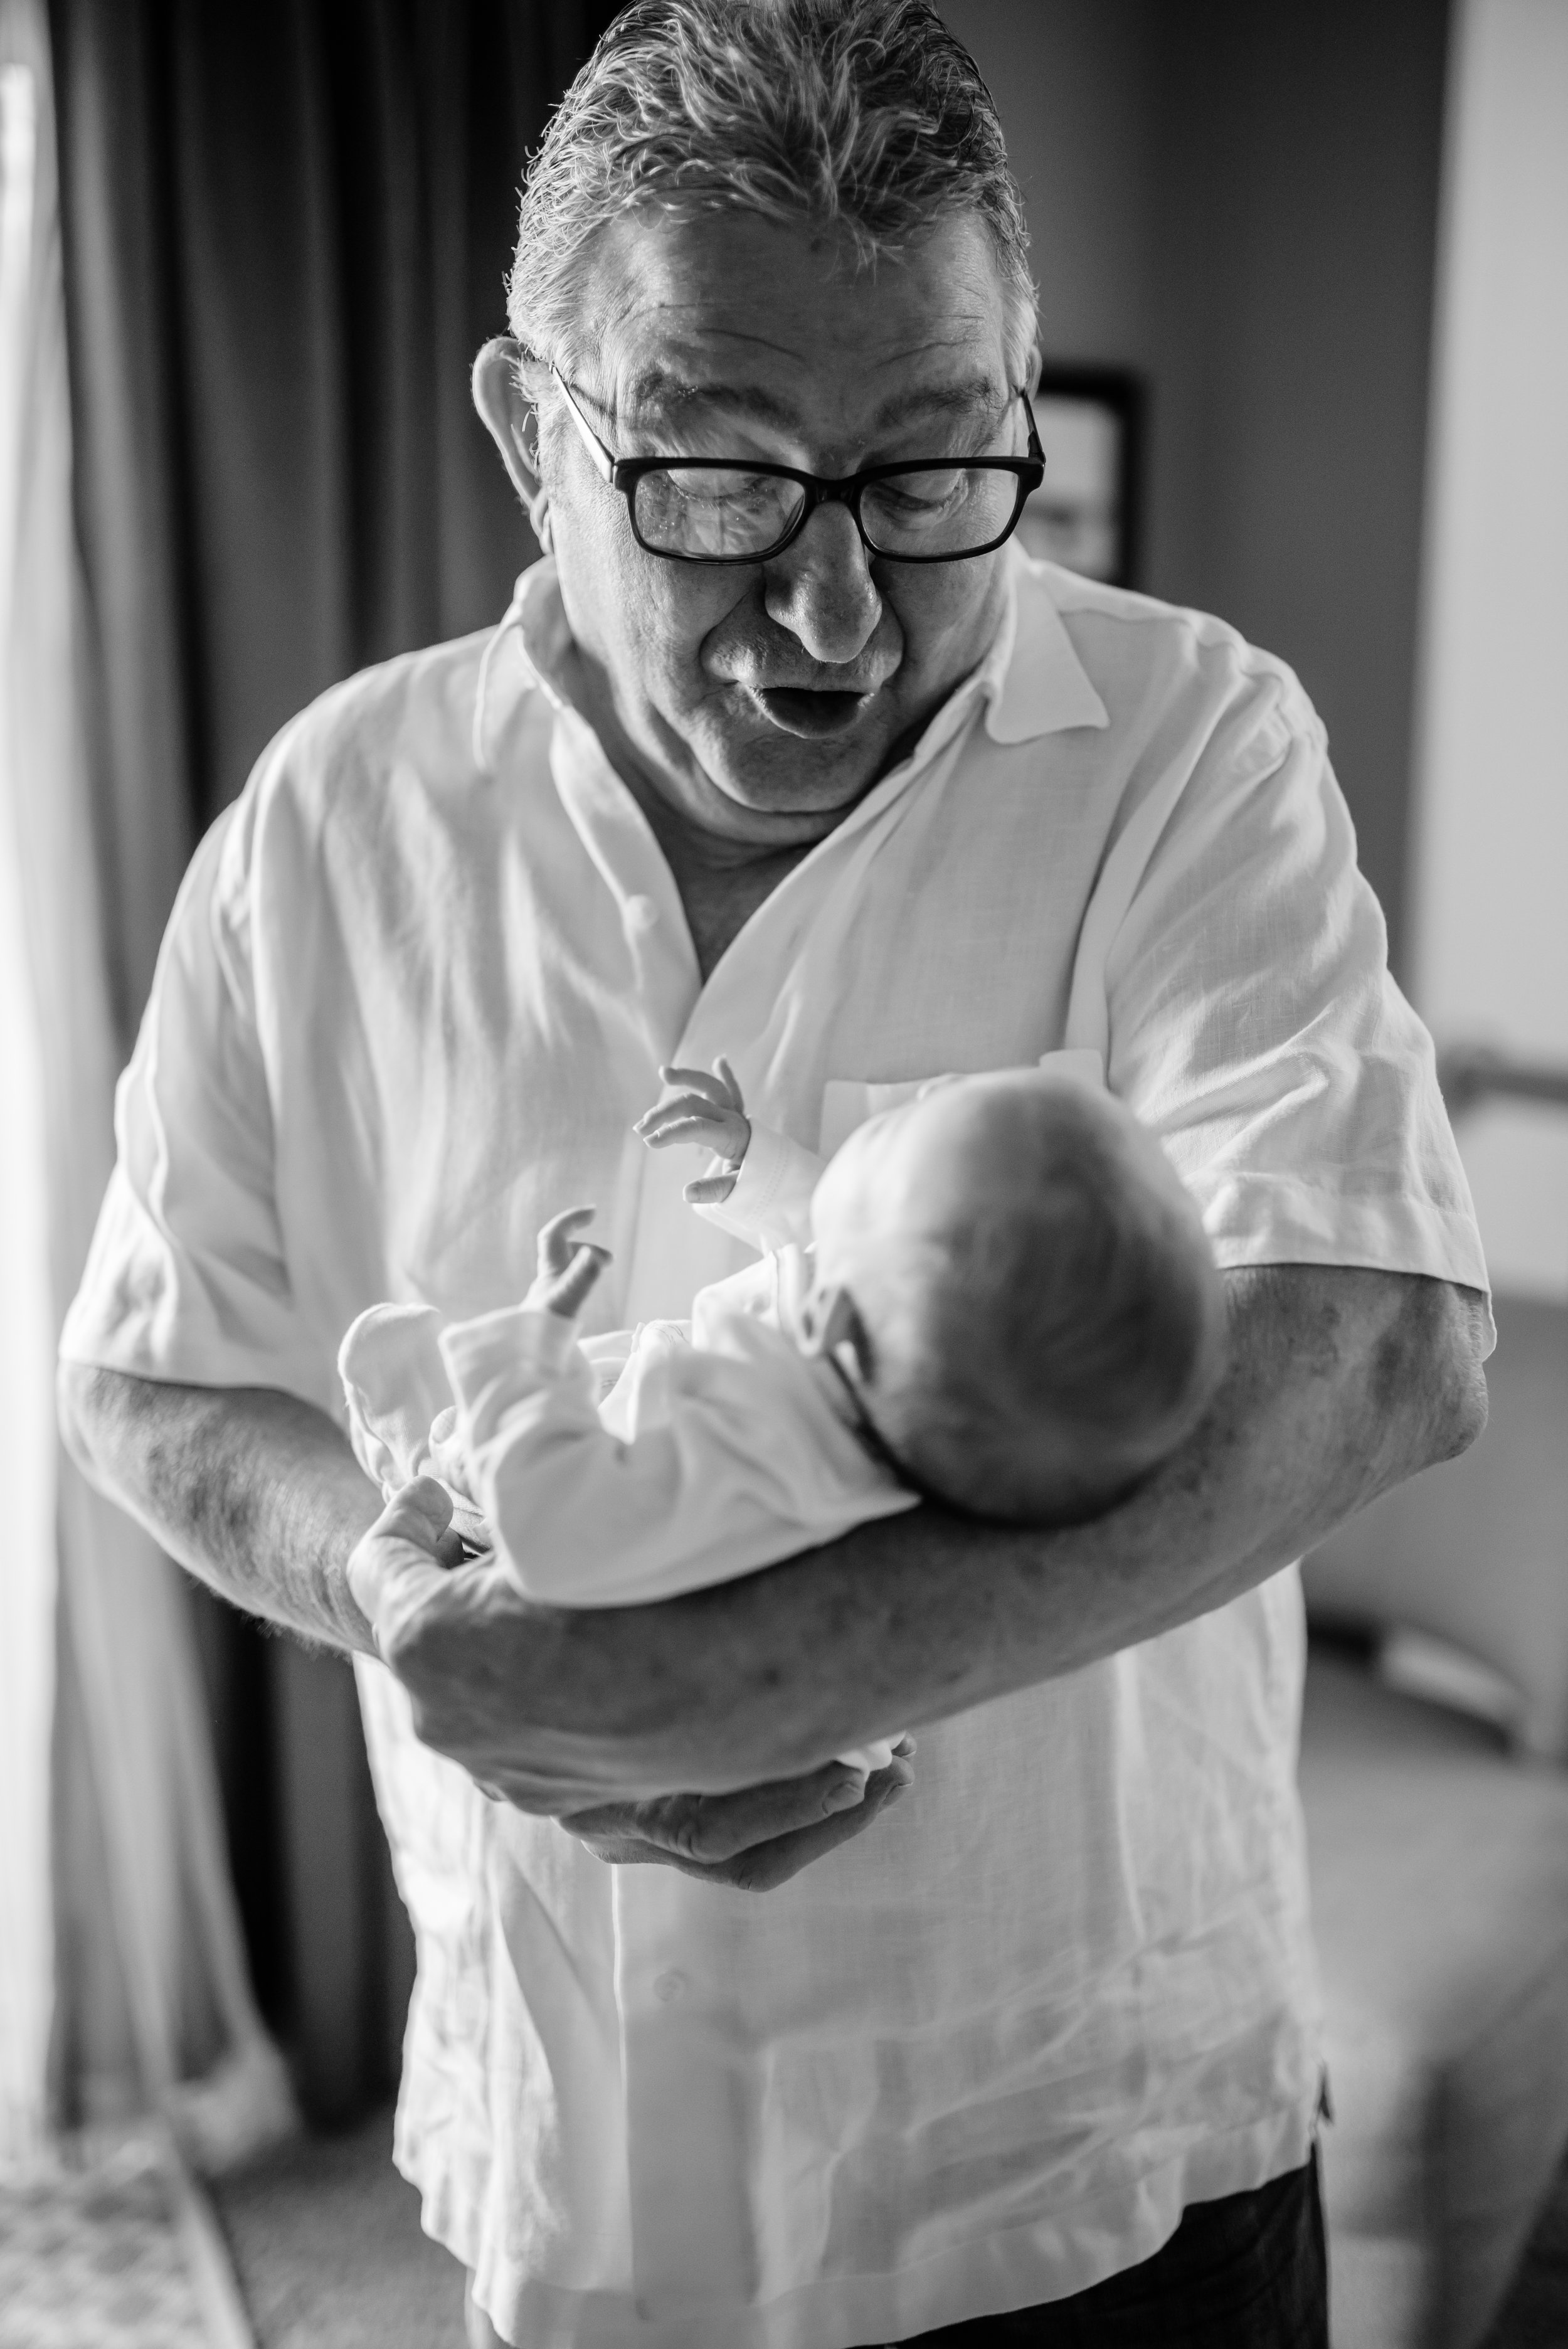 Grandpa talks to newborn baby he is holding